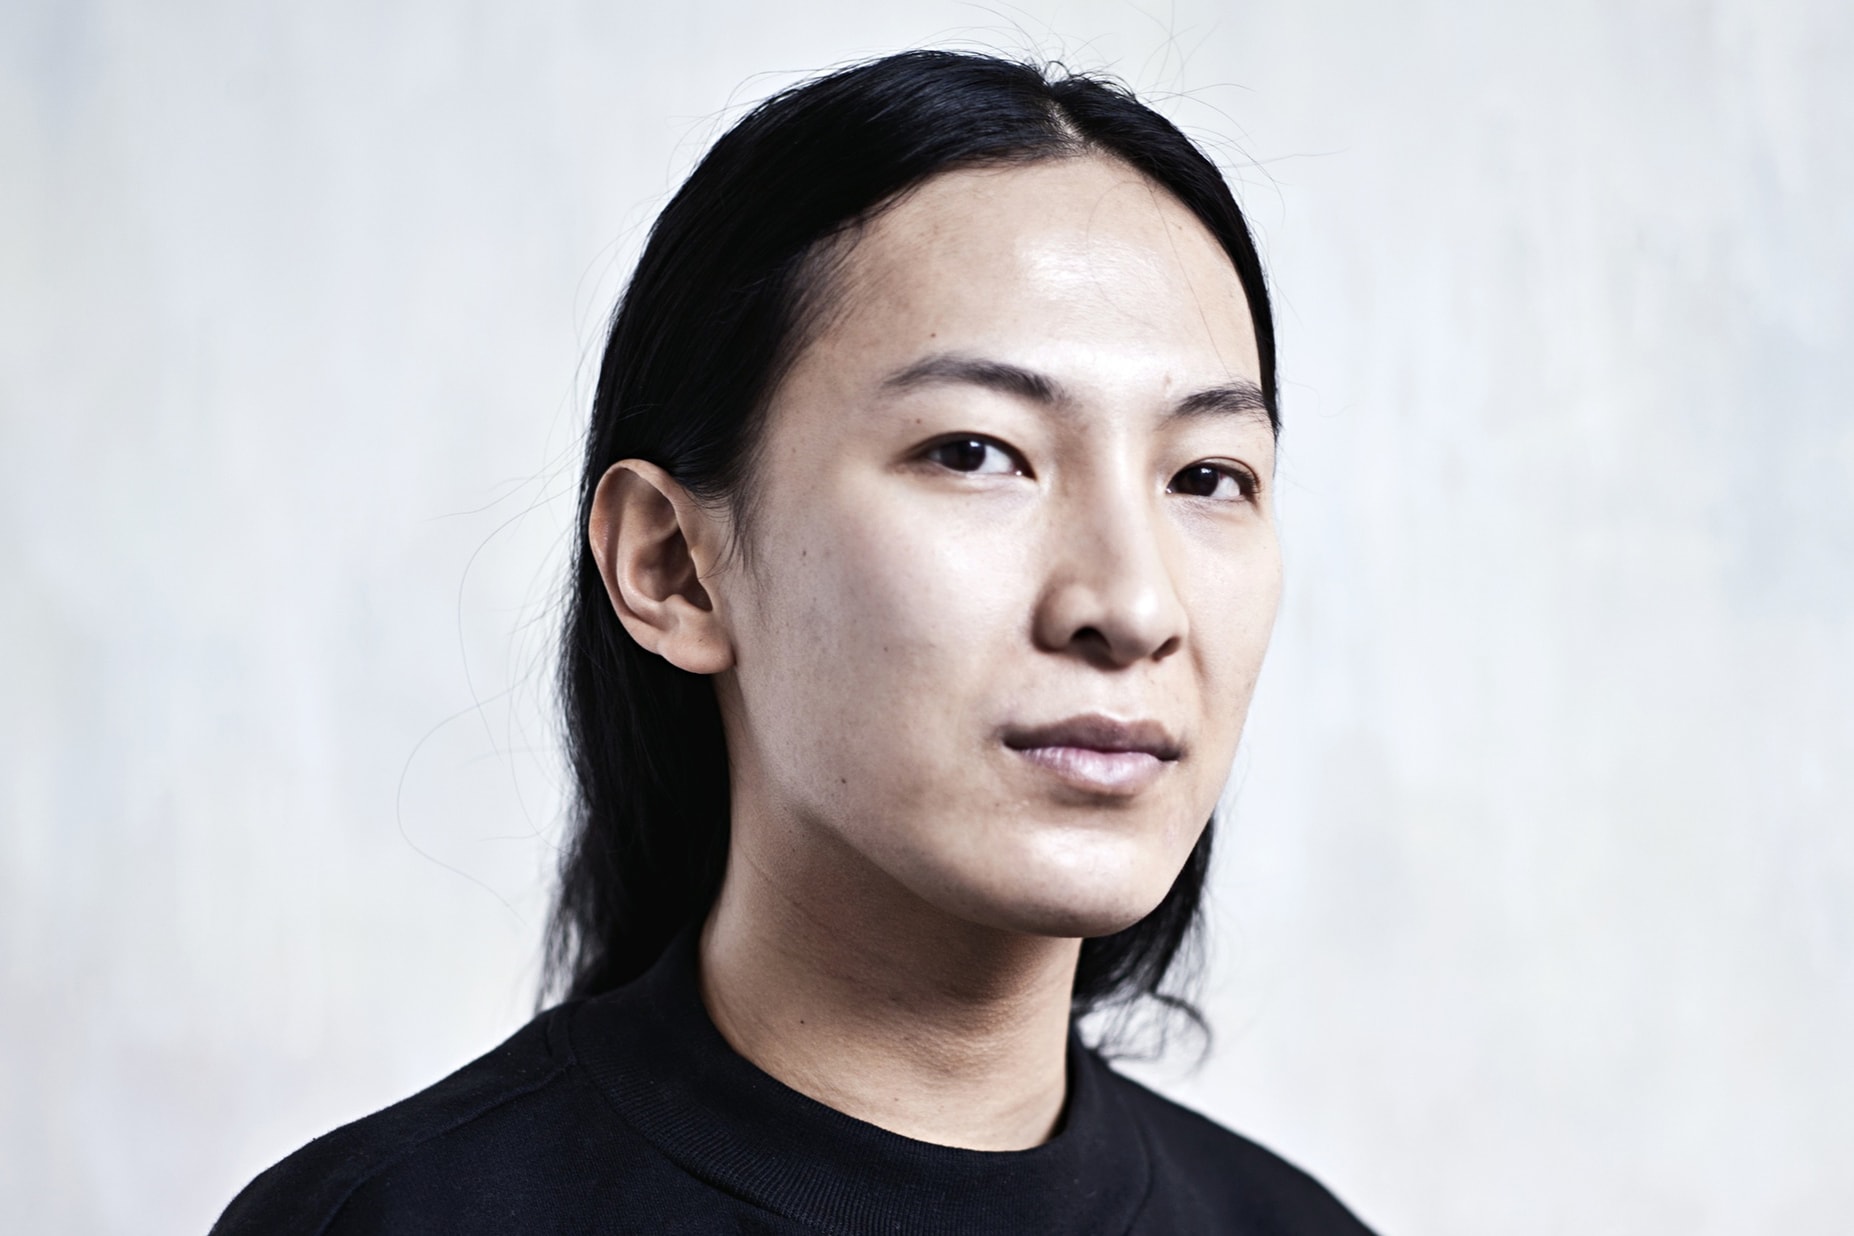 Alexander Wang, CEO, designer